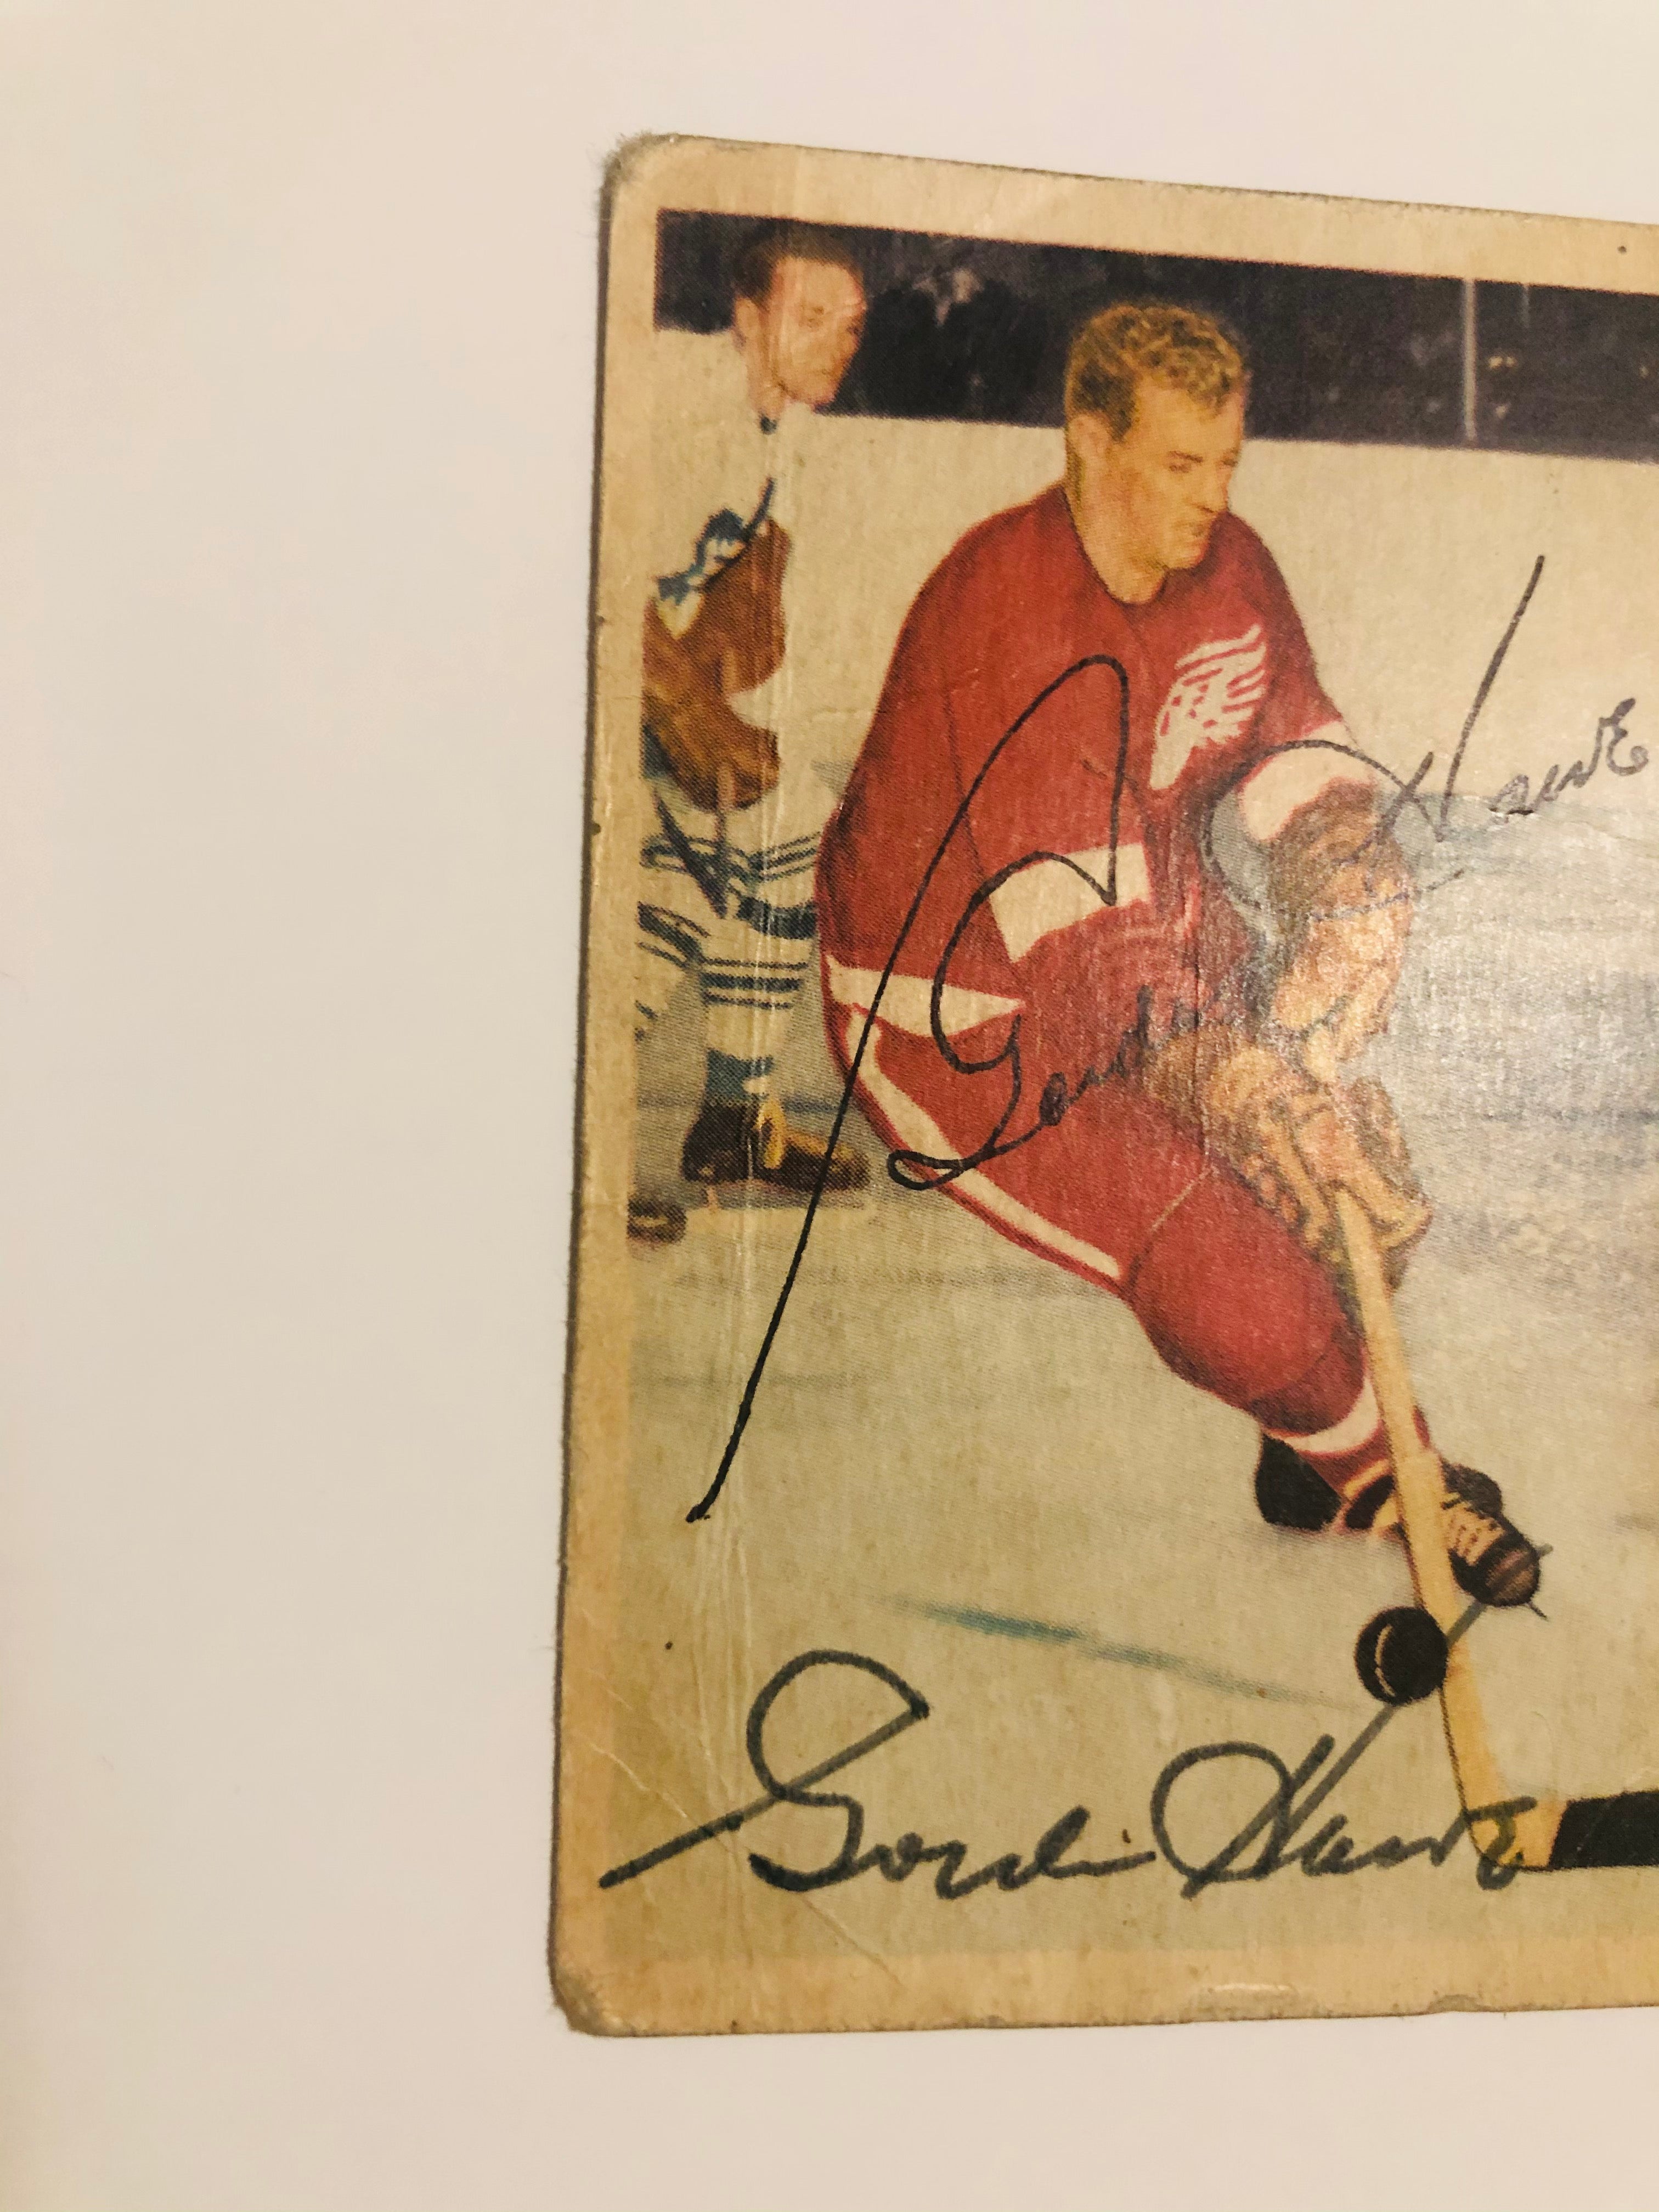 1953 Parkhurst Gordie Howe hockey card signed with COA